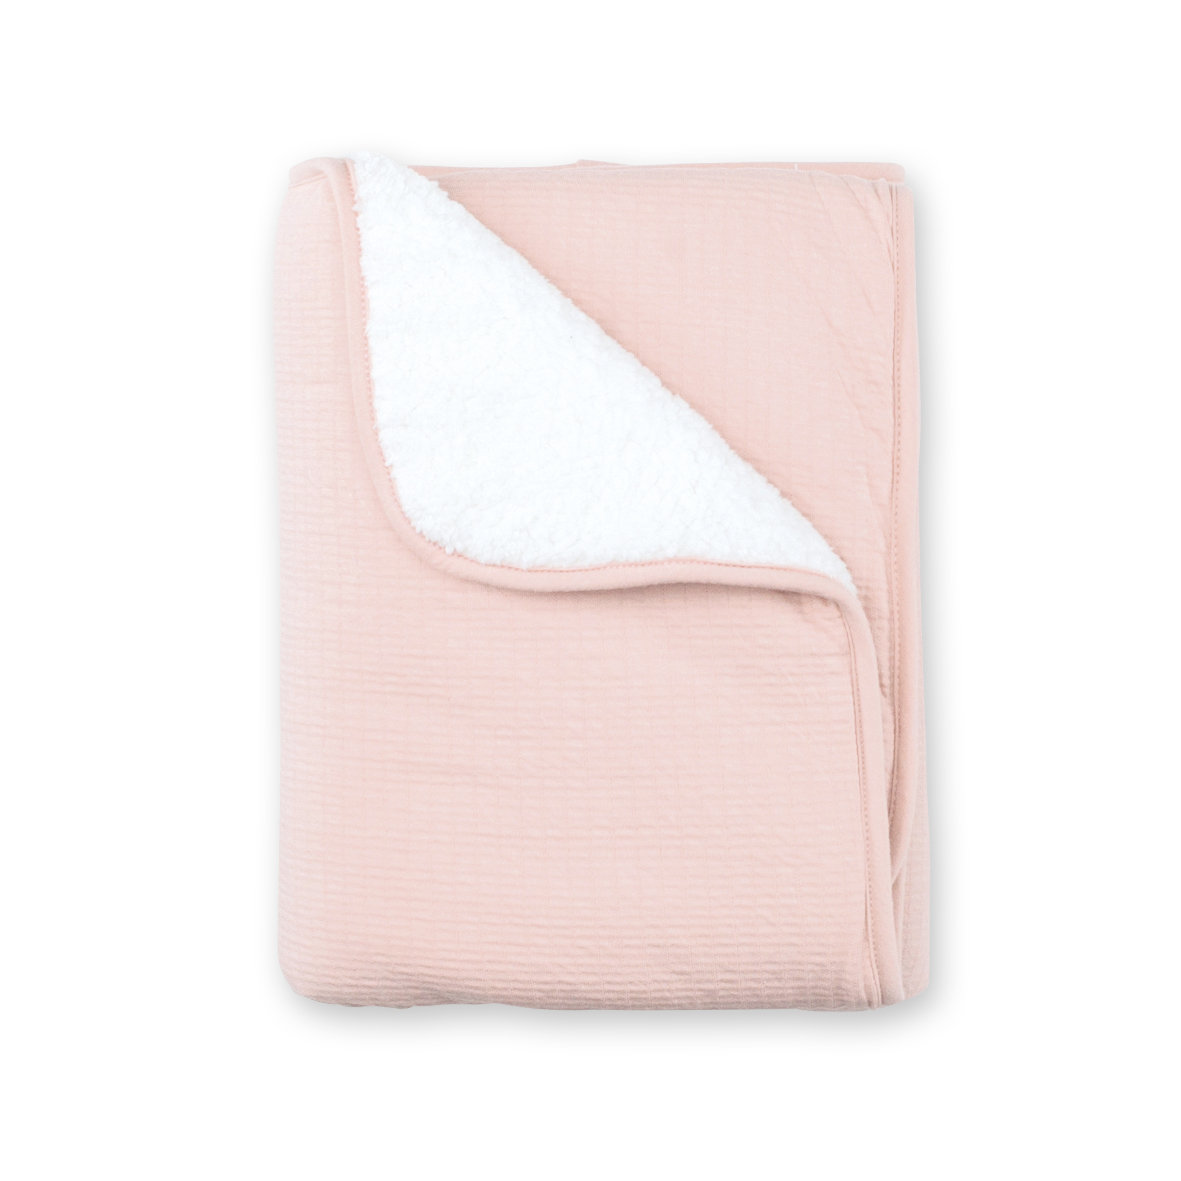 Blanket Pady tetra jersey + teddy 75x100cm CADUM Old pink